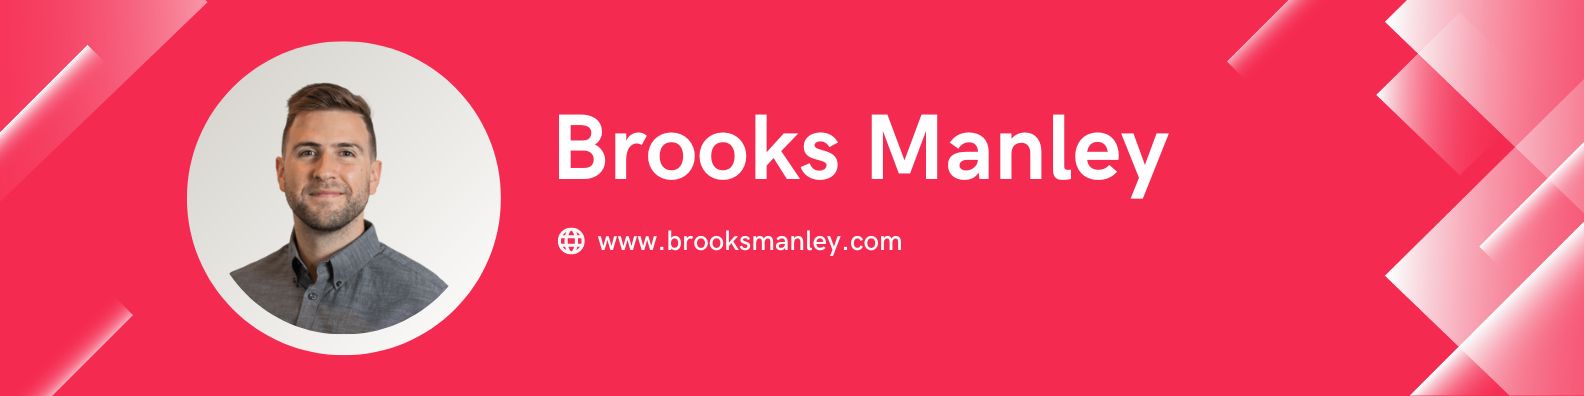 Brooks Manley